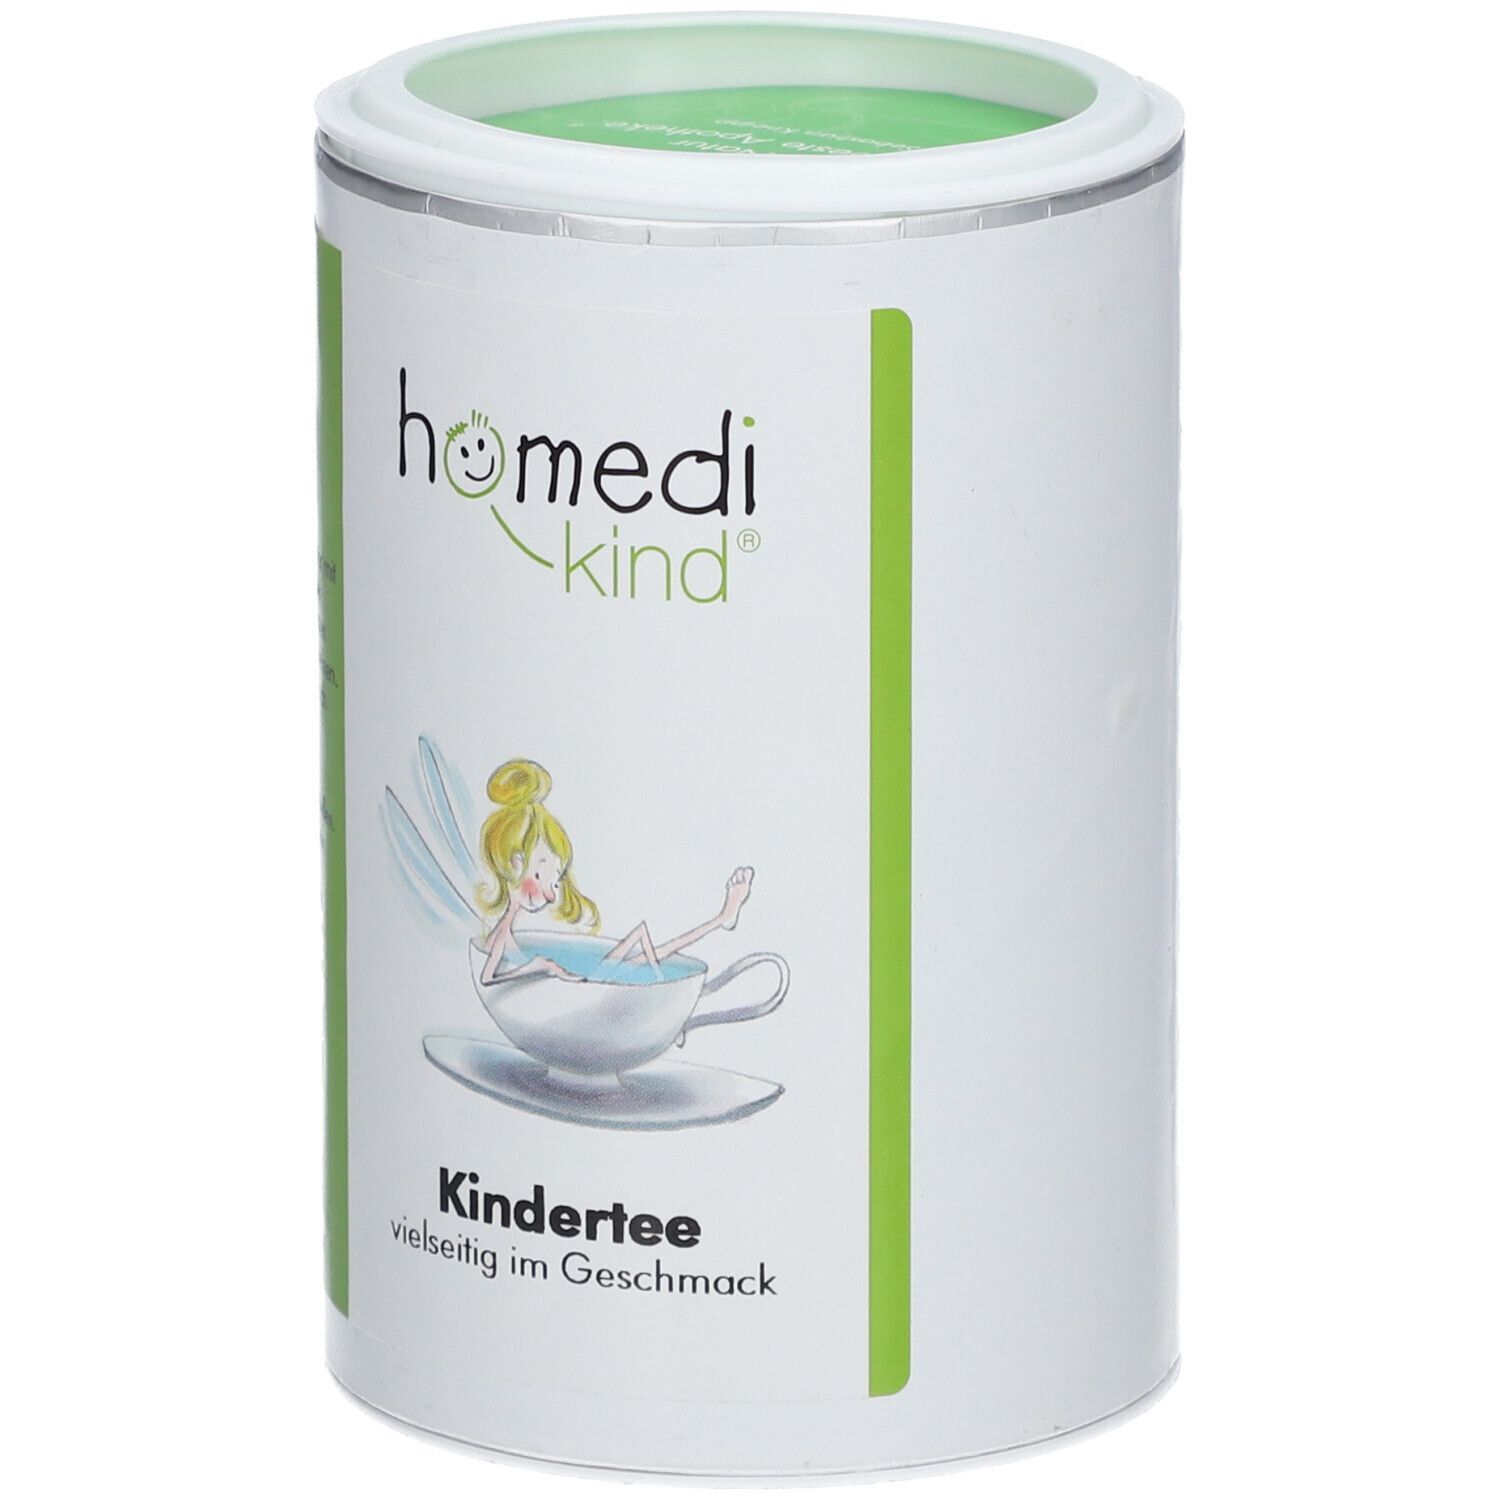 homedi-kind® Kindertee